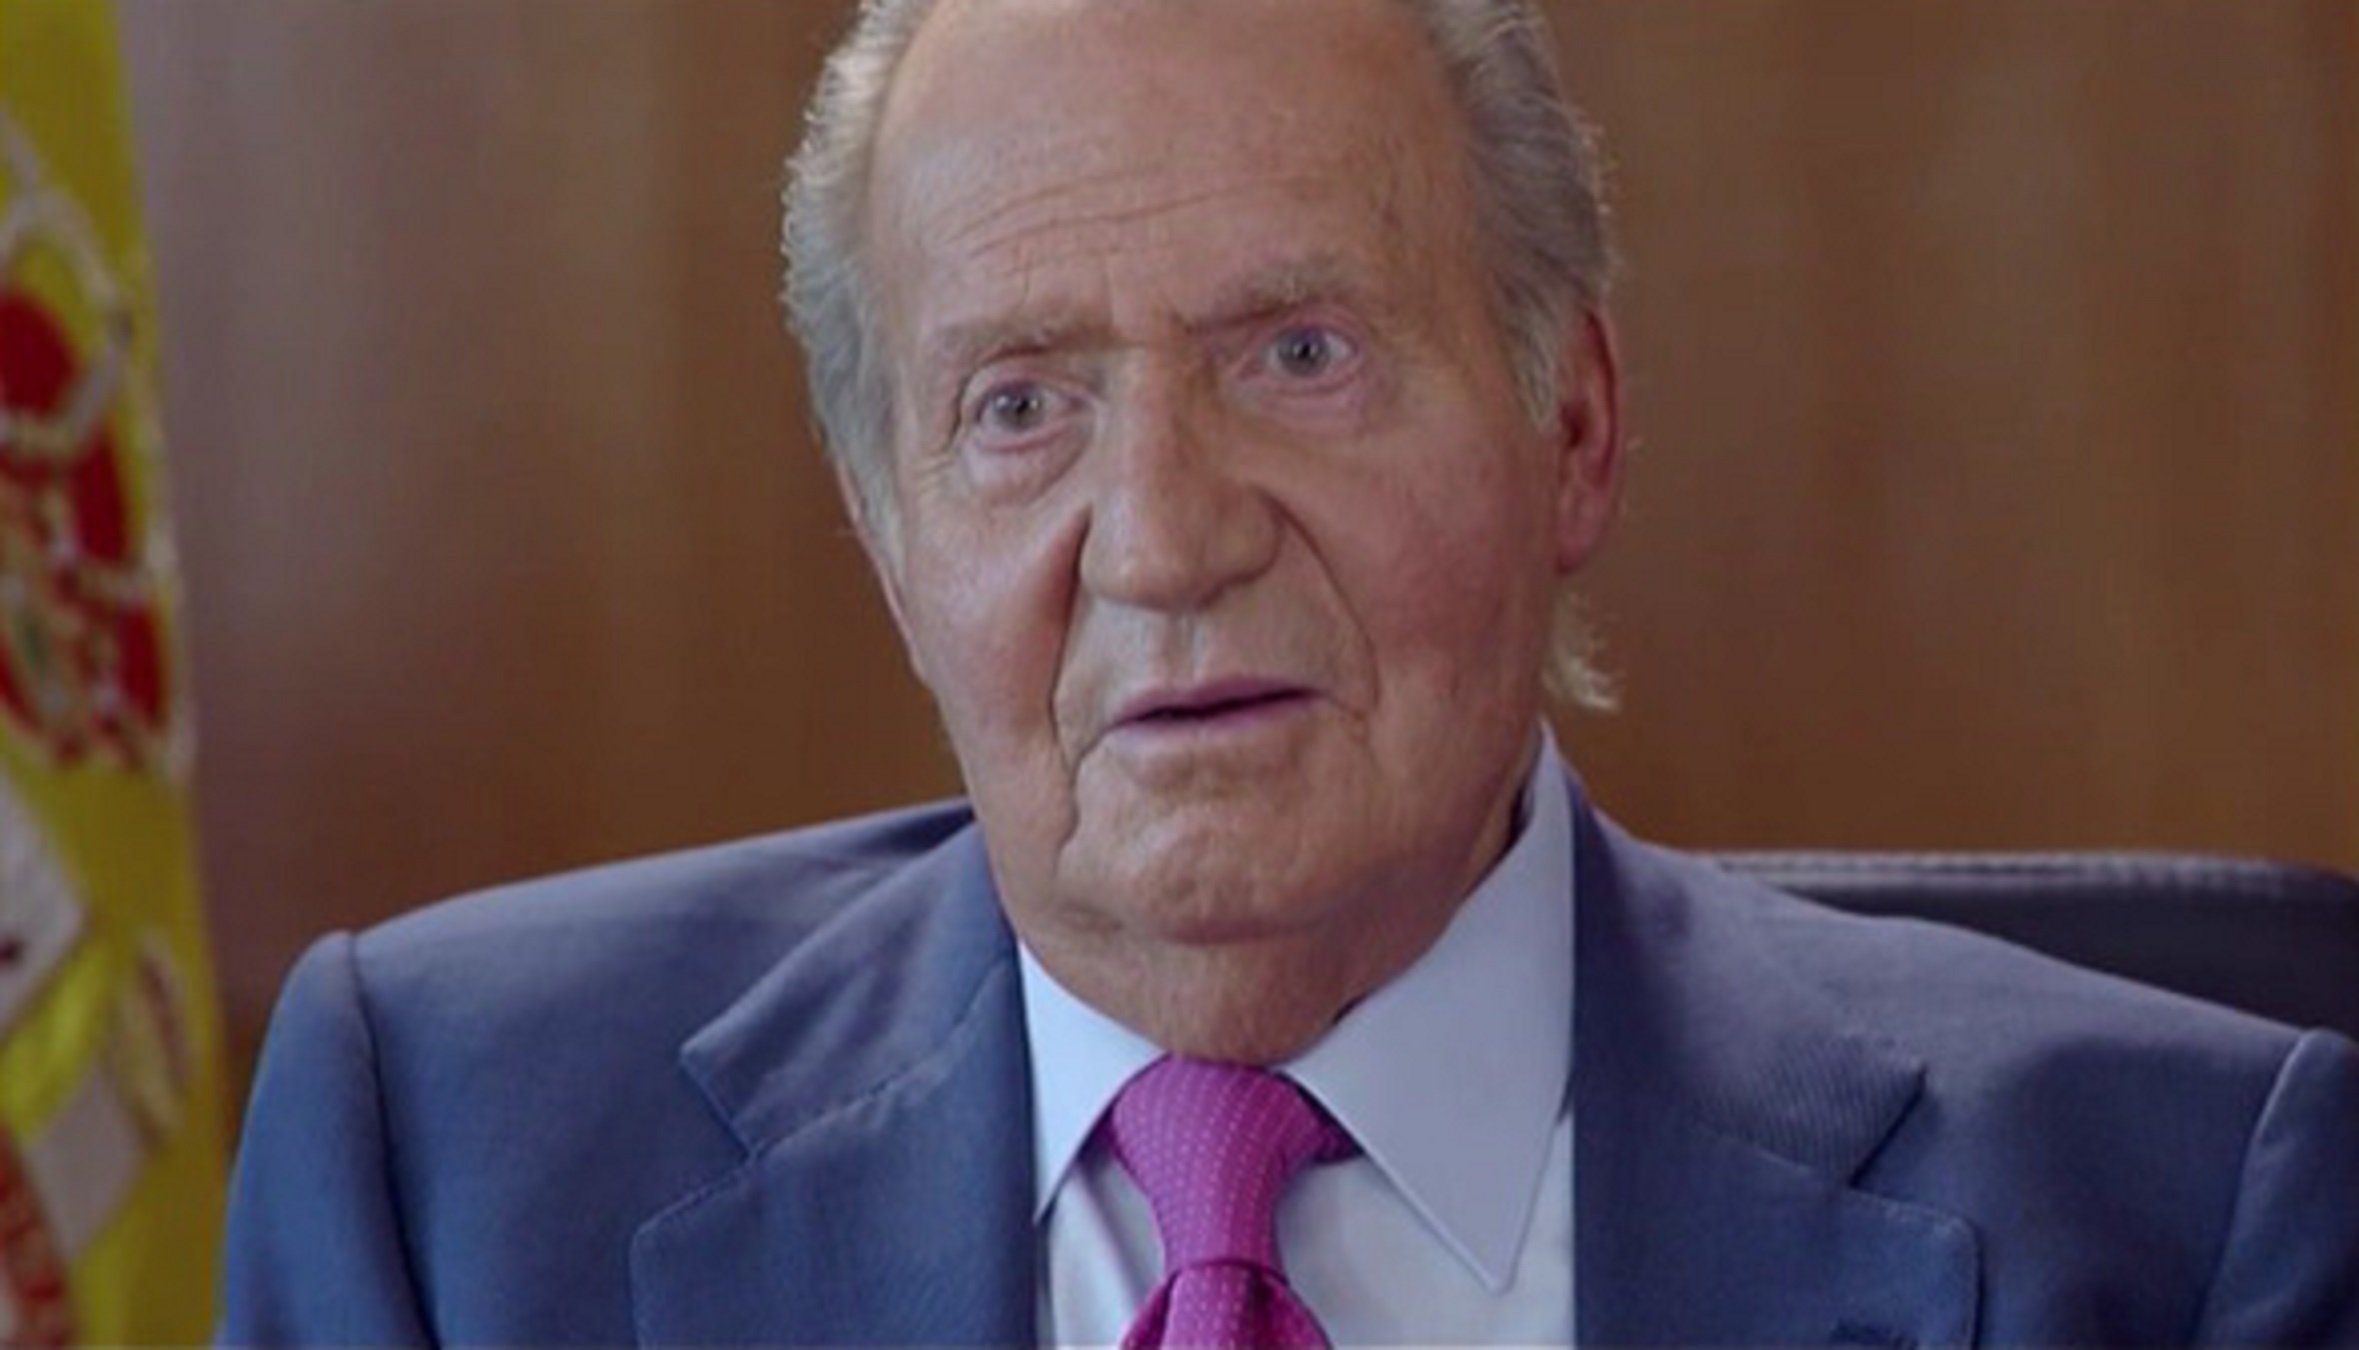 Íntim de Joan Carles revela el pànic que no el deixa dormir: "Le da mucho miedo"